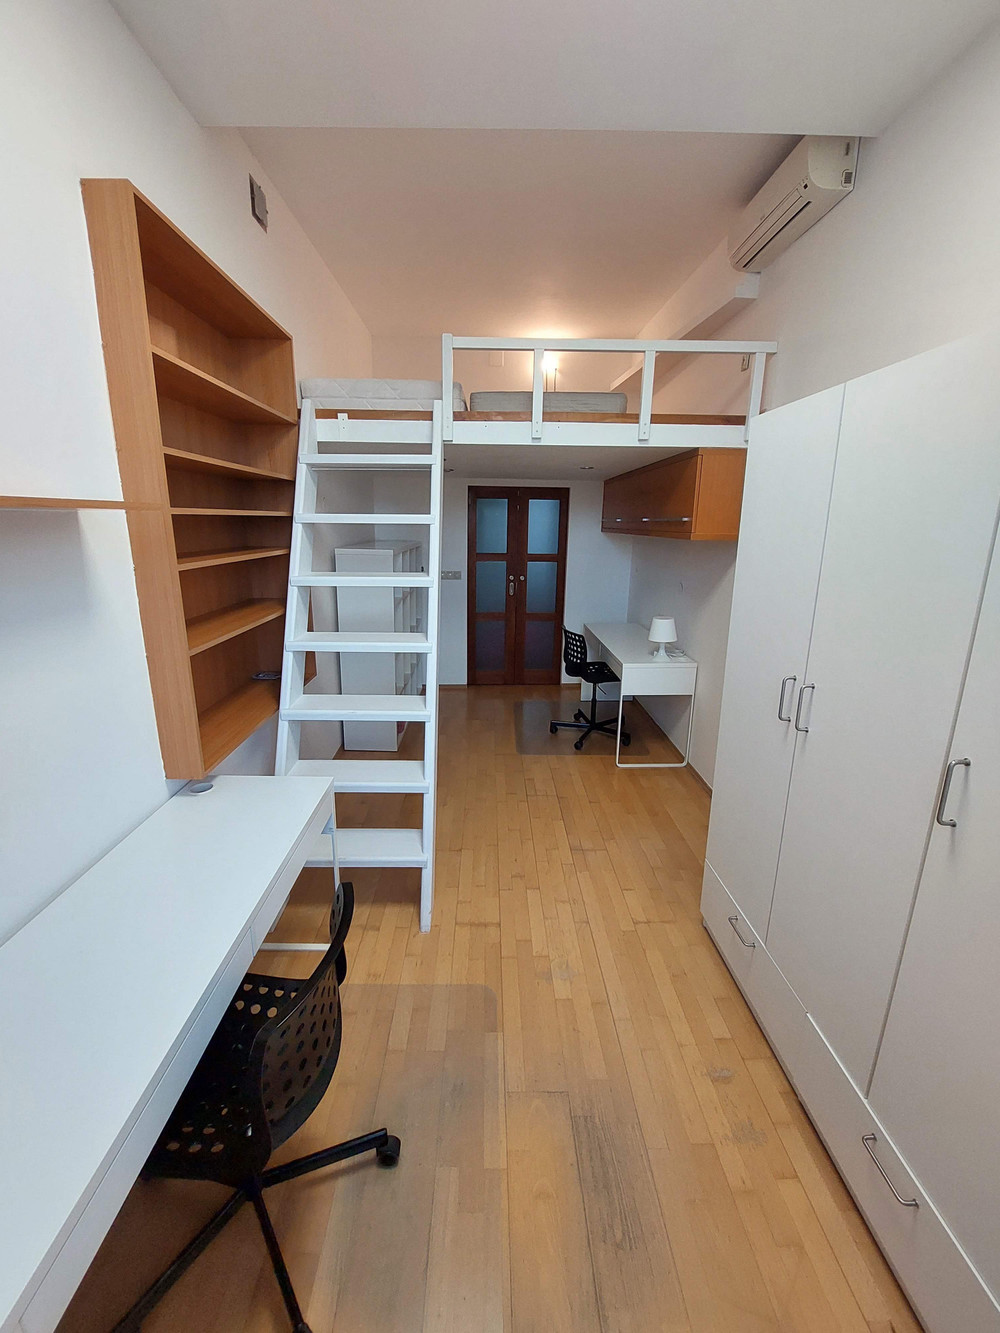 Room in shared flat near Brno centre